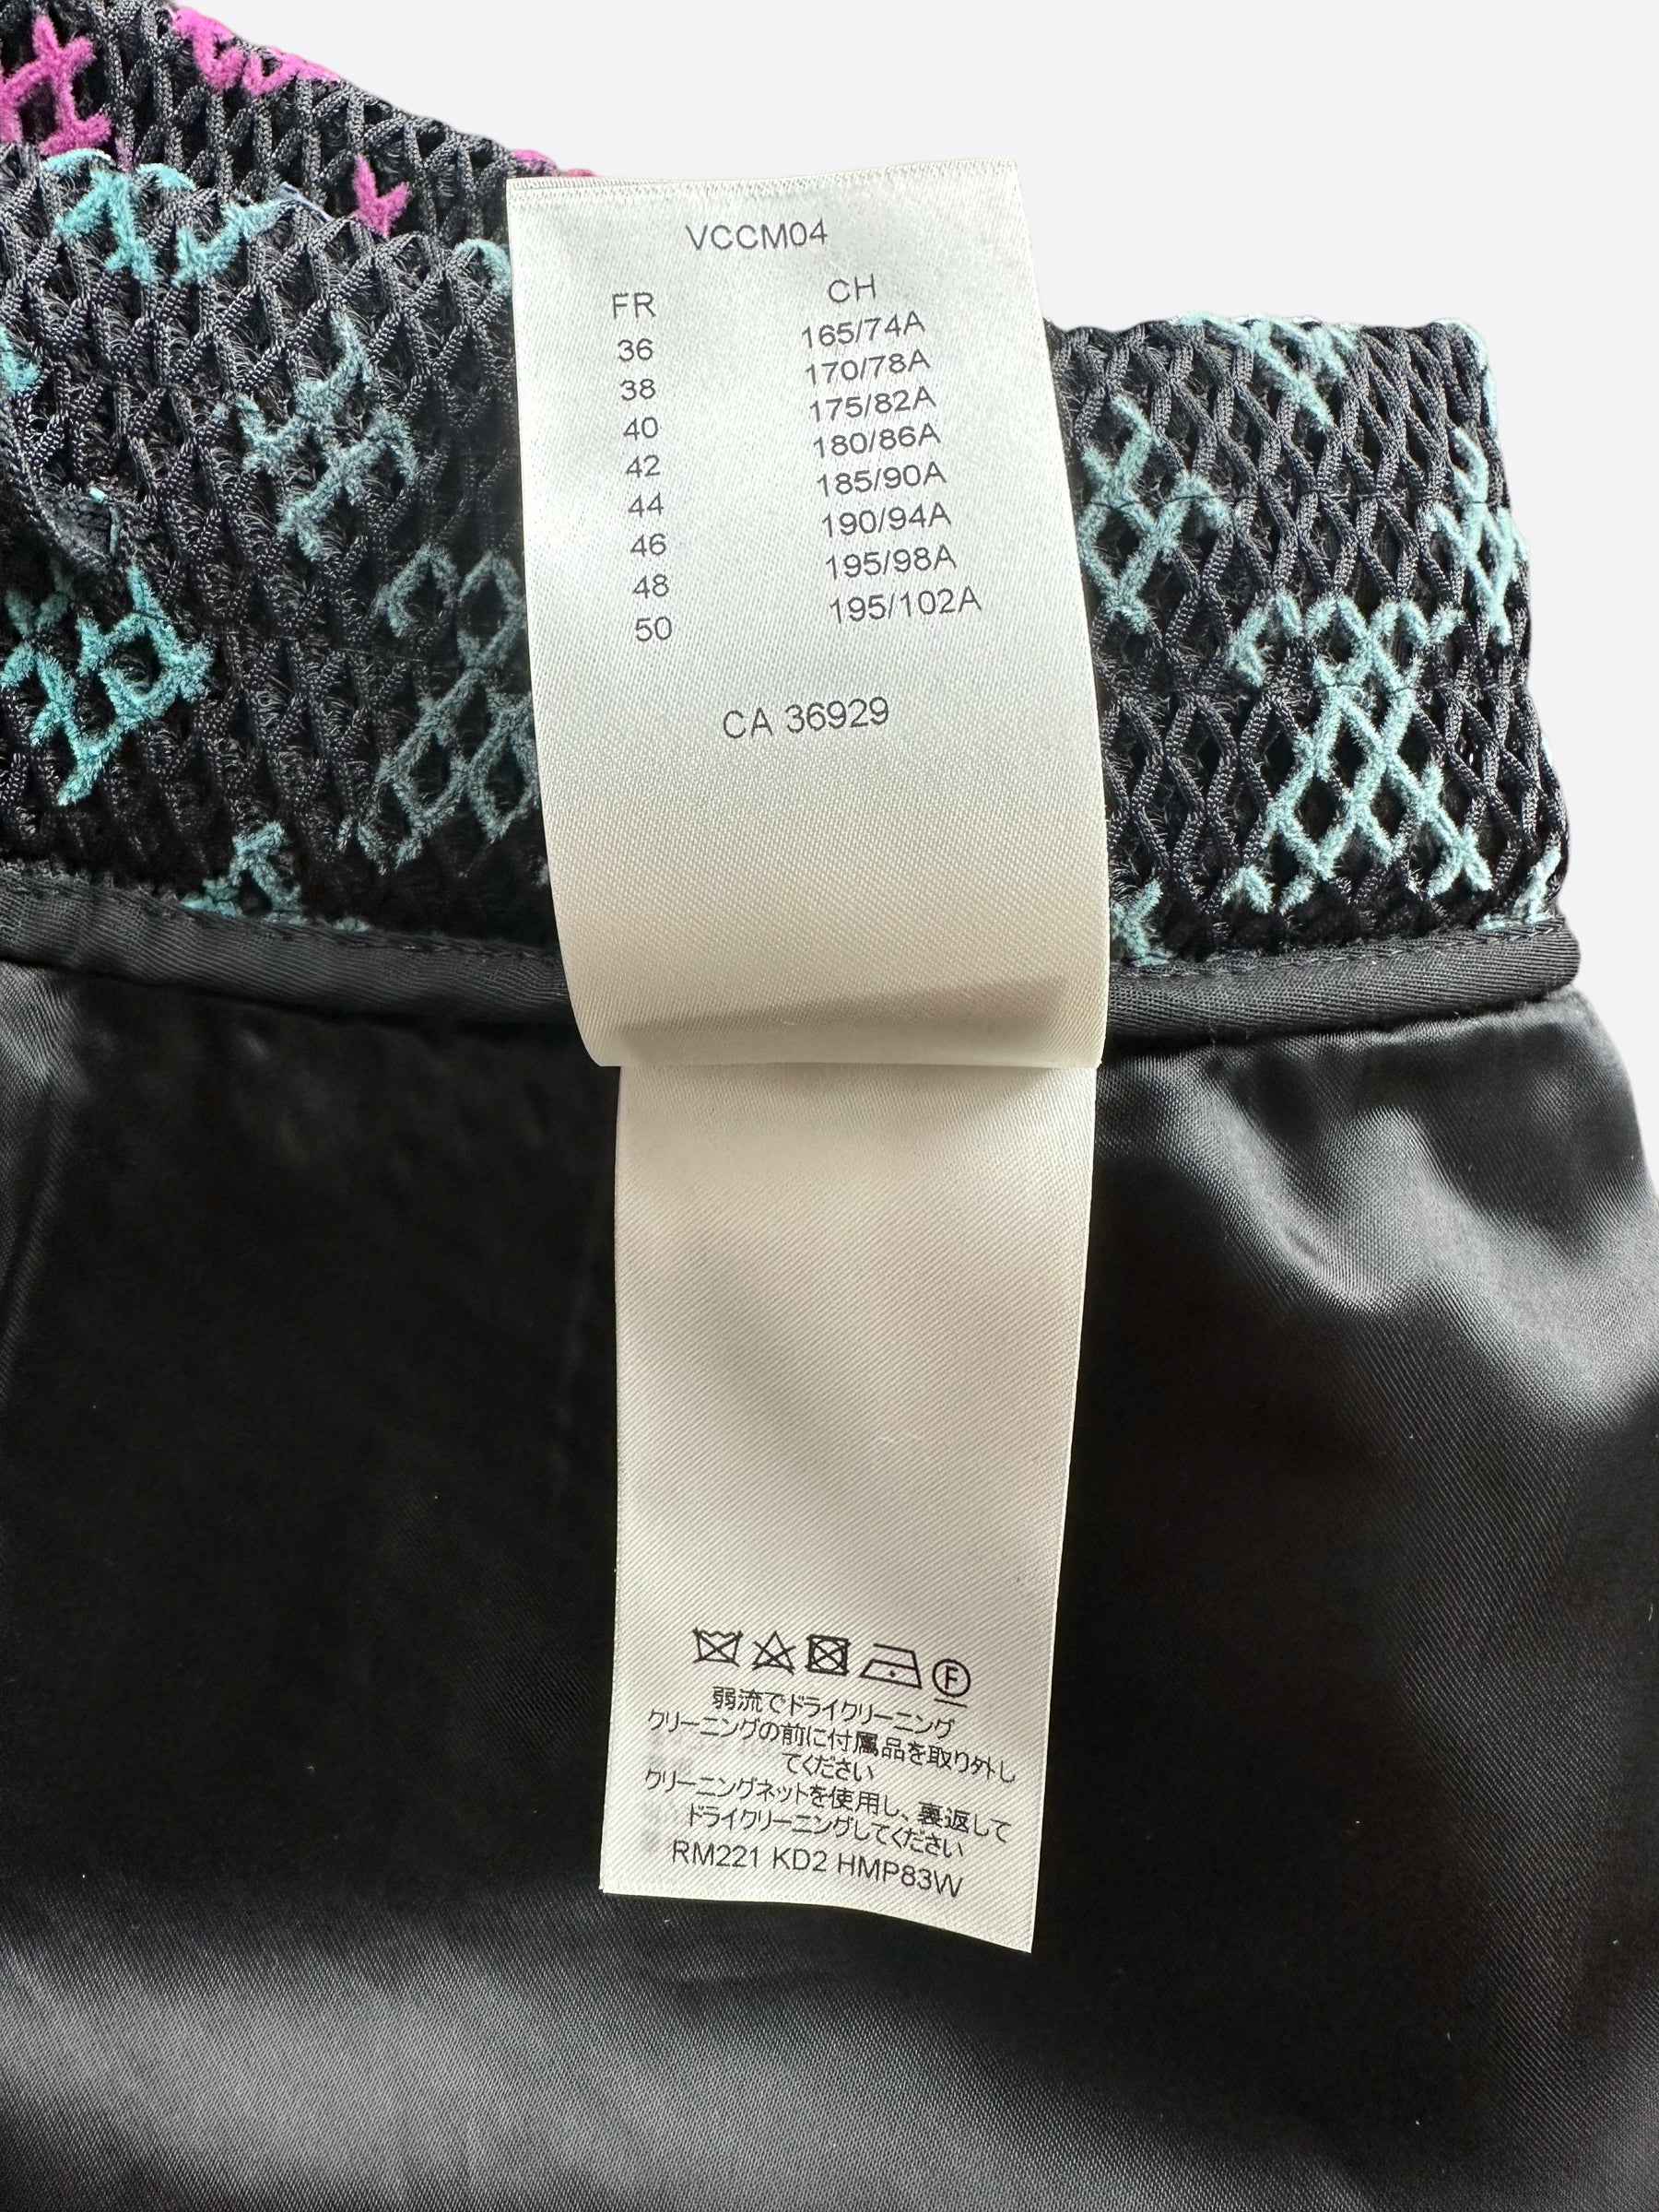 Louis Vuitton Mesh Shorts Black Men's - SS22 - US